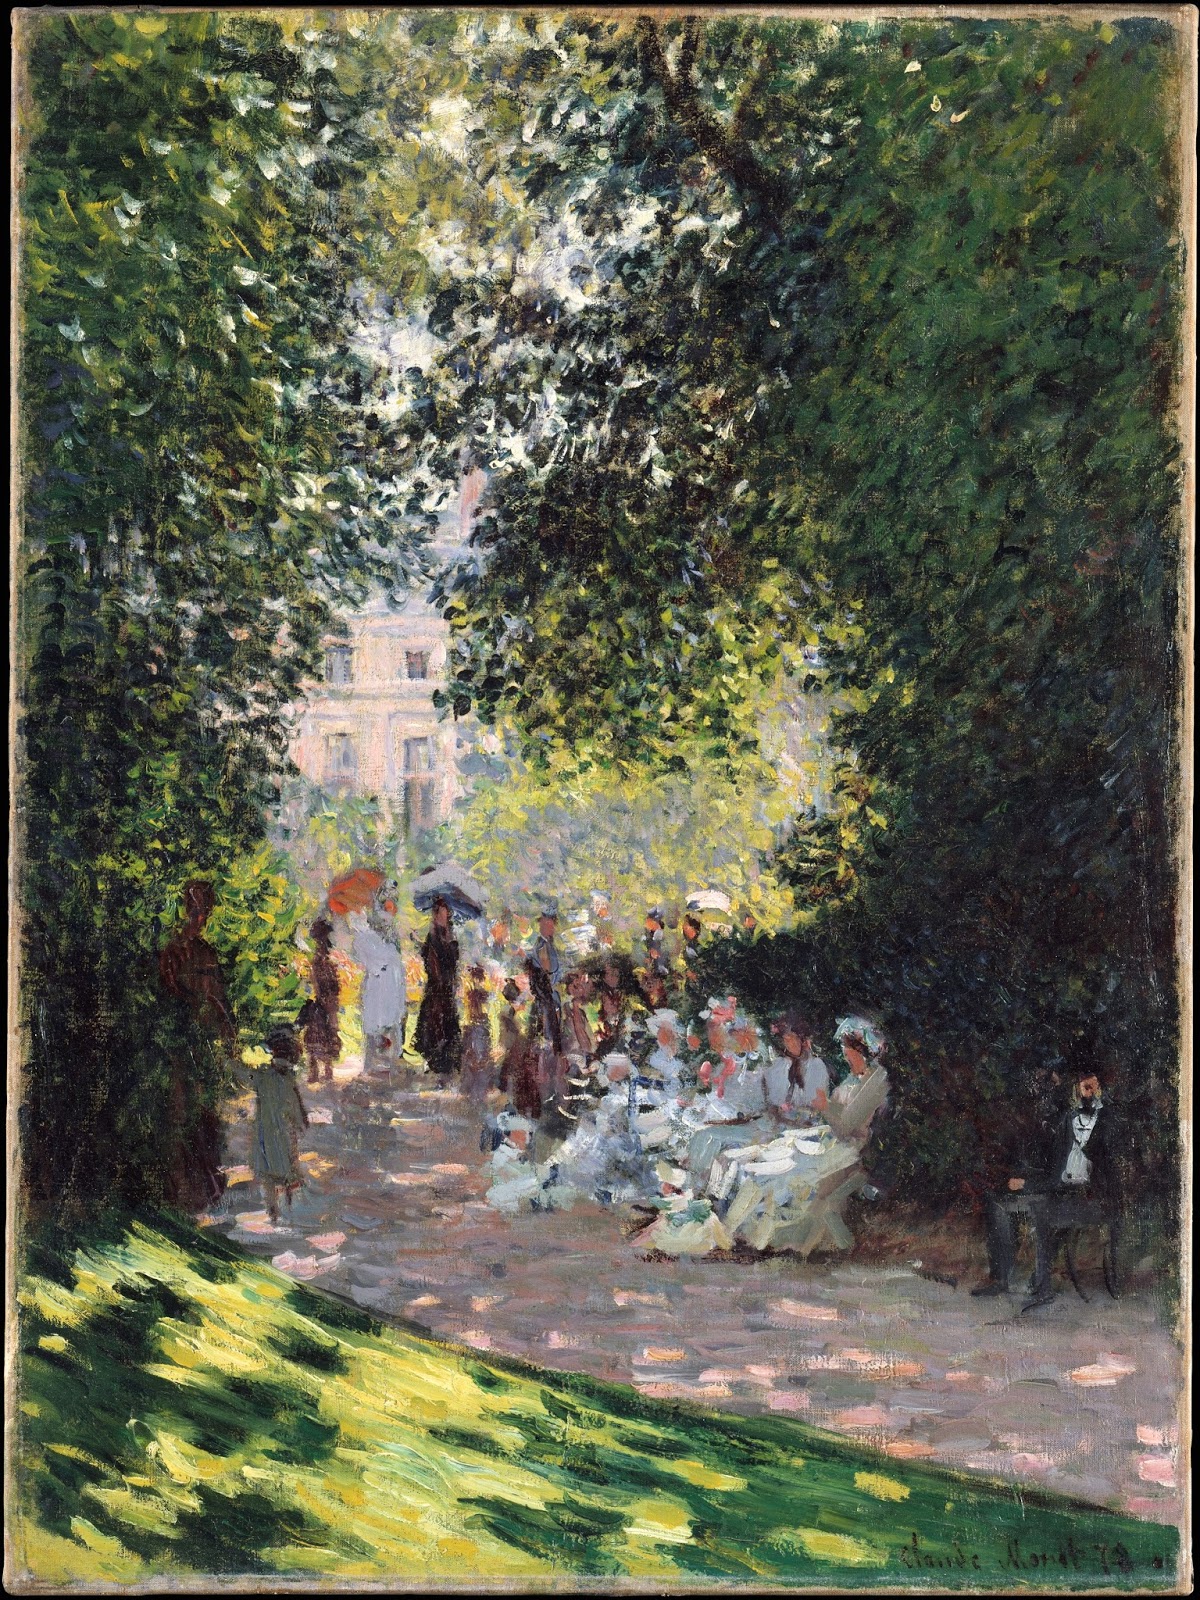 Claude+Monet-1840-1926 (782).jpg